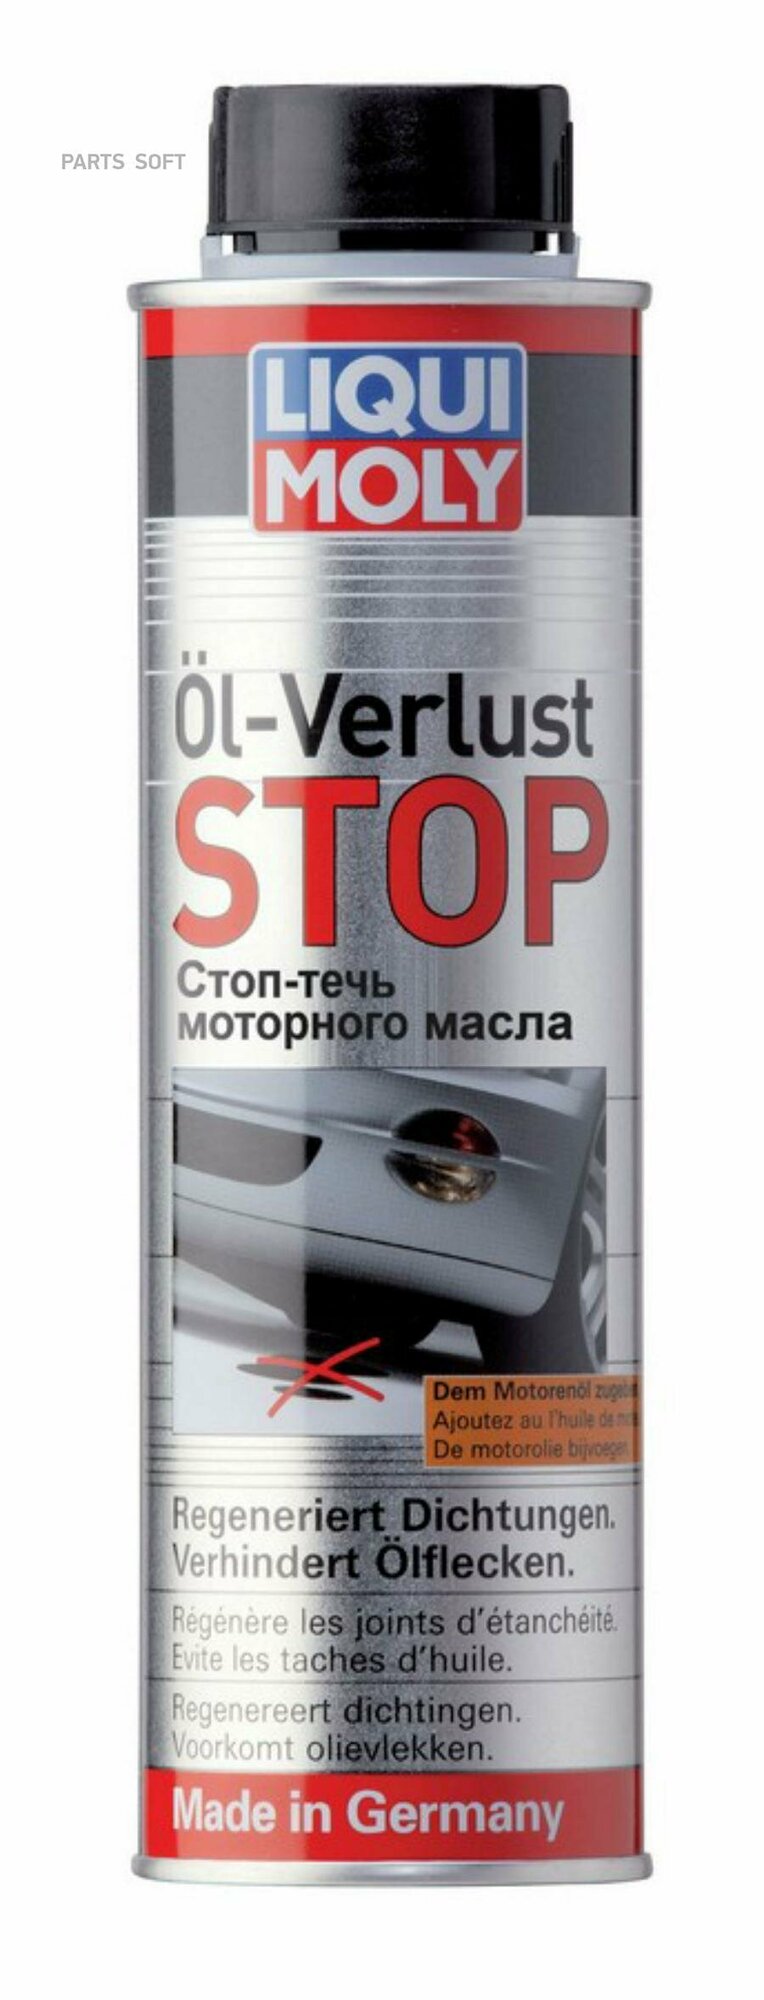 LIQUI MOLY 1995 LiquiMoly Oil-Verlust-Stop 0.3L_средство для остановки течи моторного масла !\